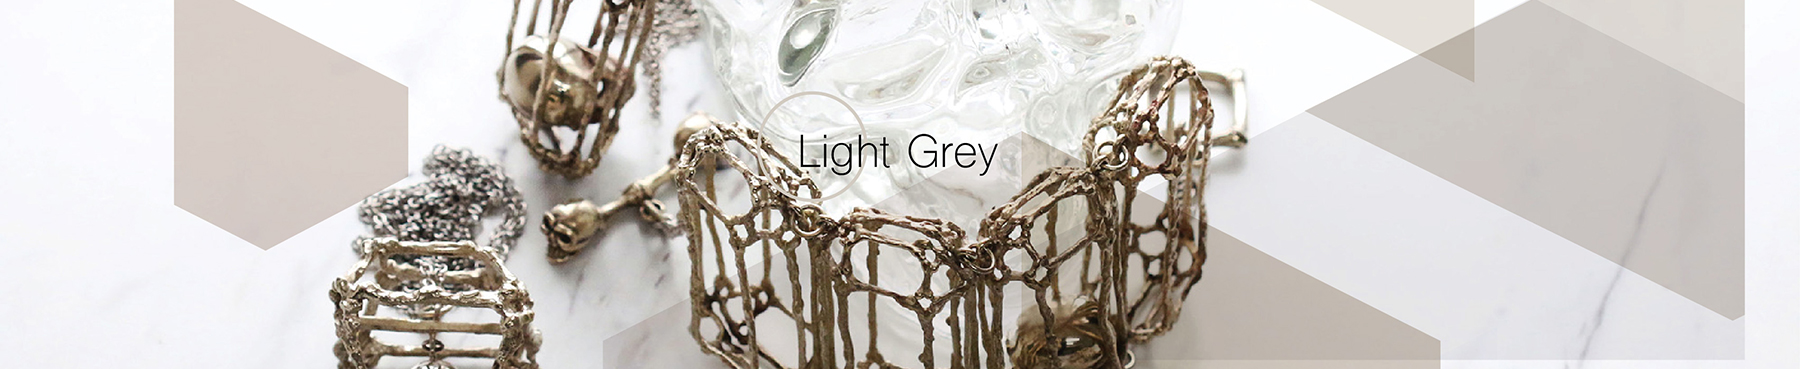 Light-Grey-Banner-02_high